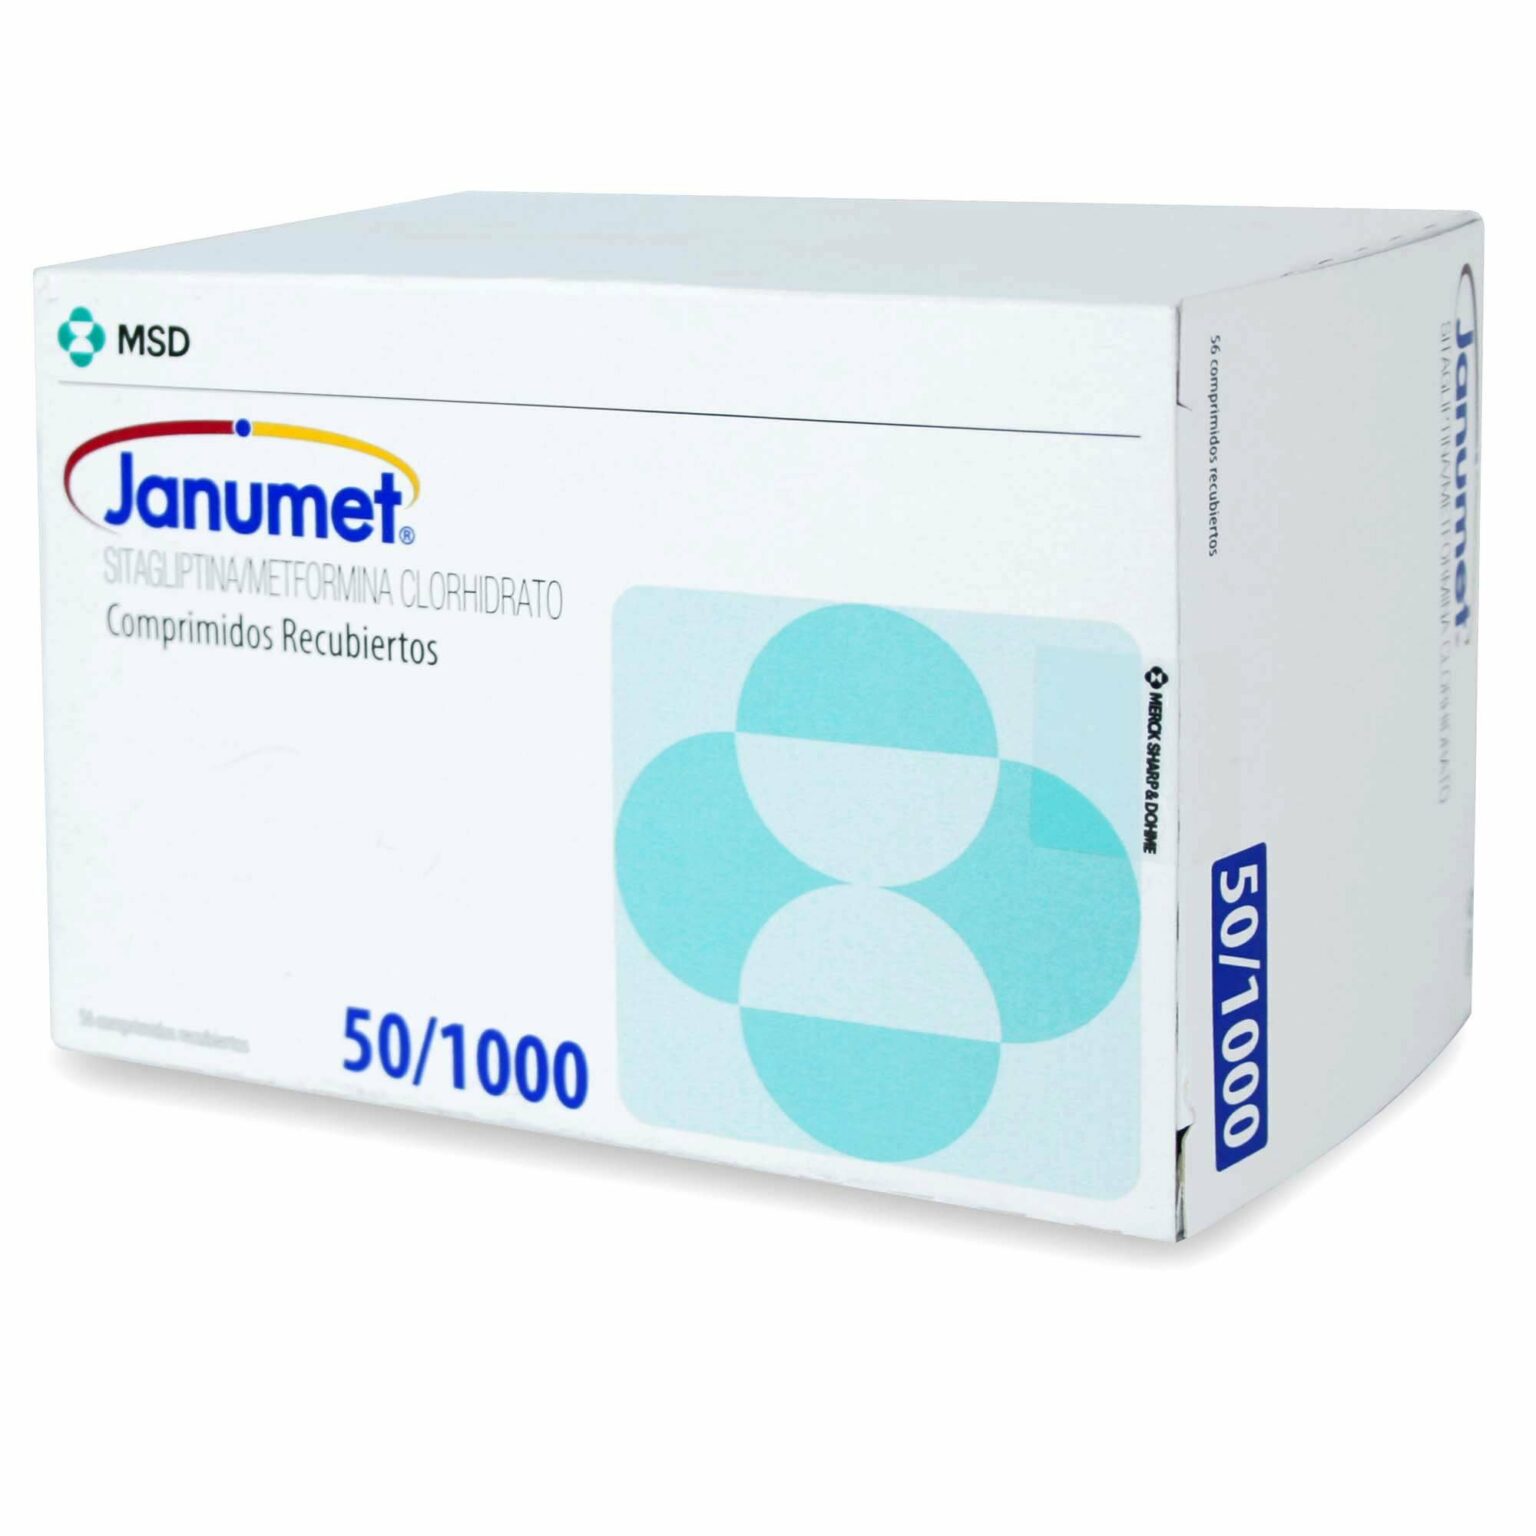 Janumet 501000 X 56 Com Sitagliptinametformina Clorhidrato Farmacia Belgochilena 7690